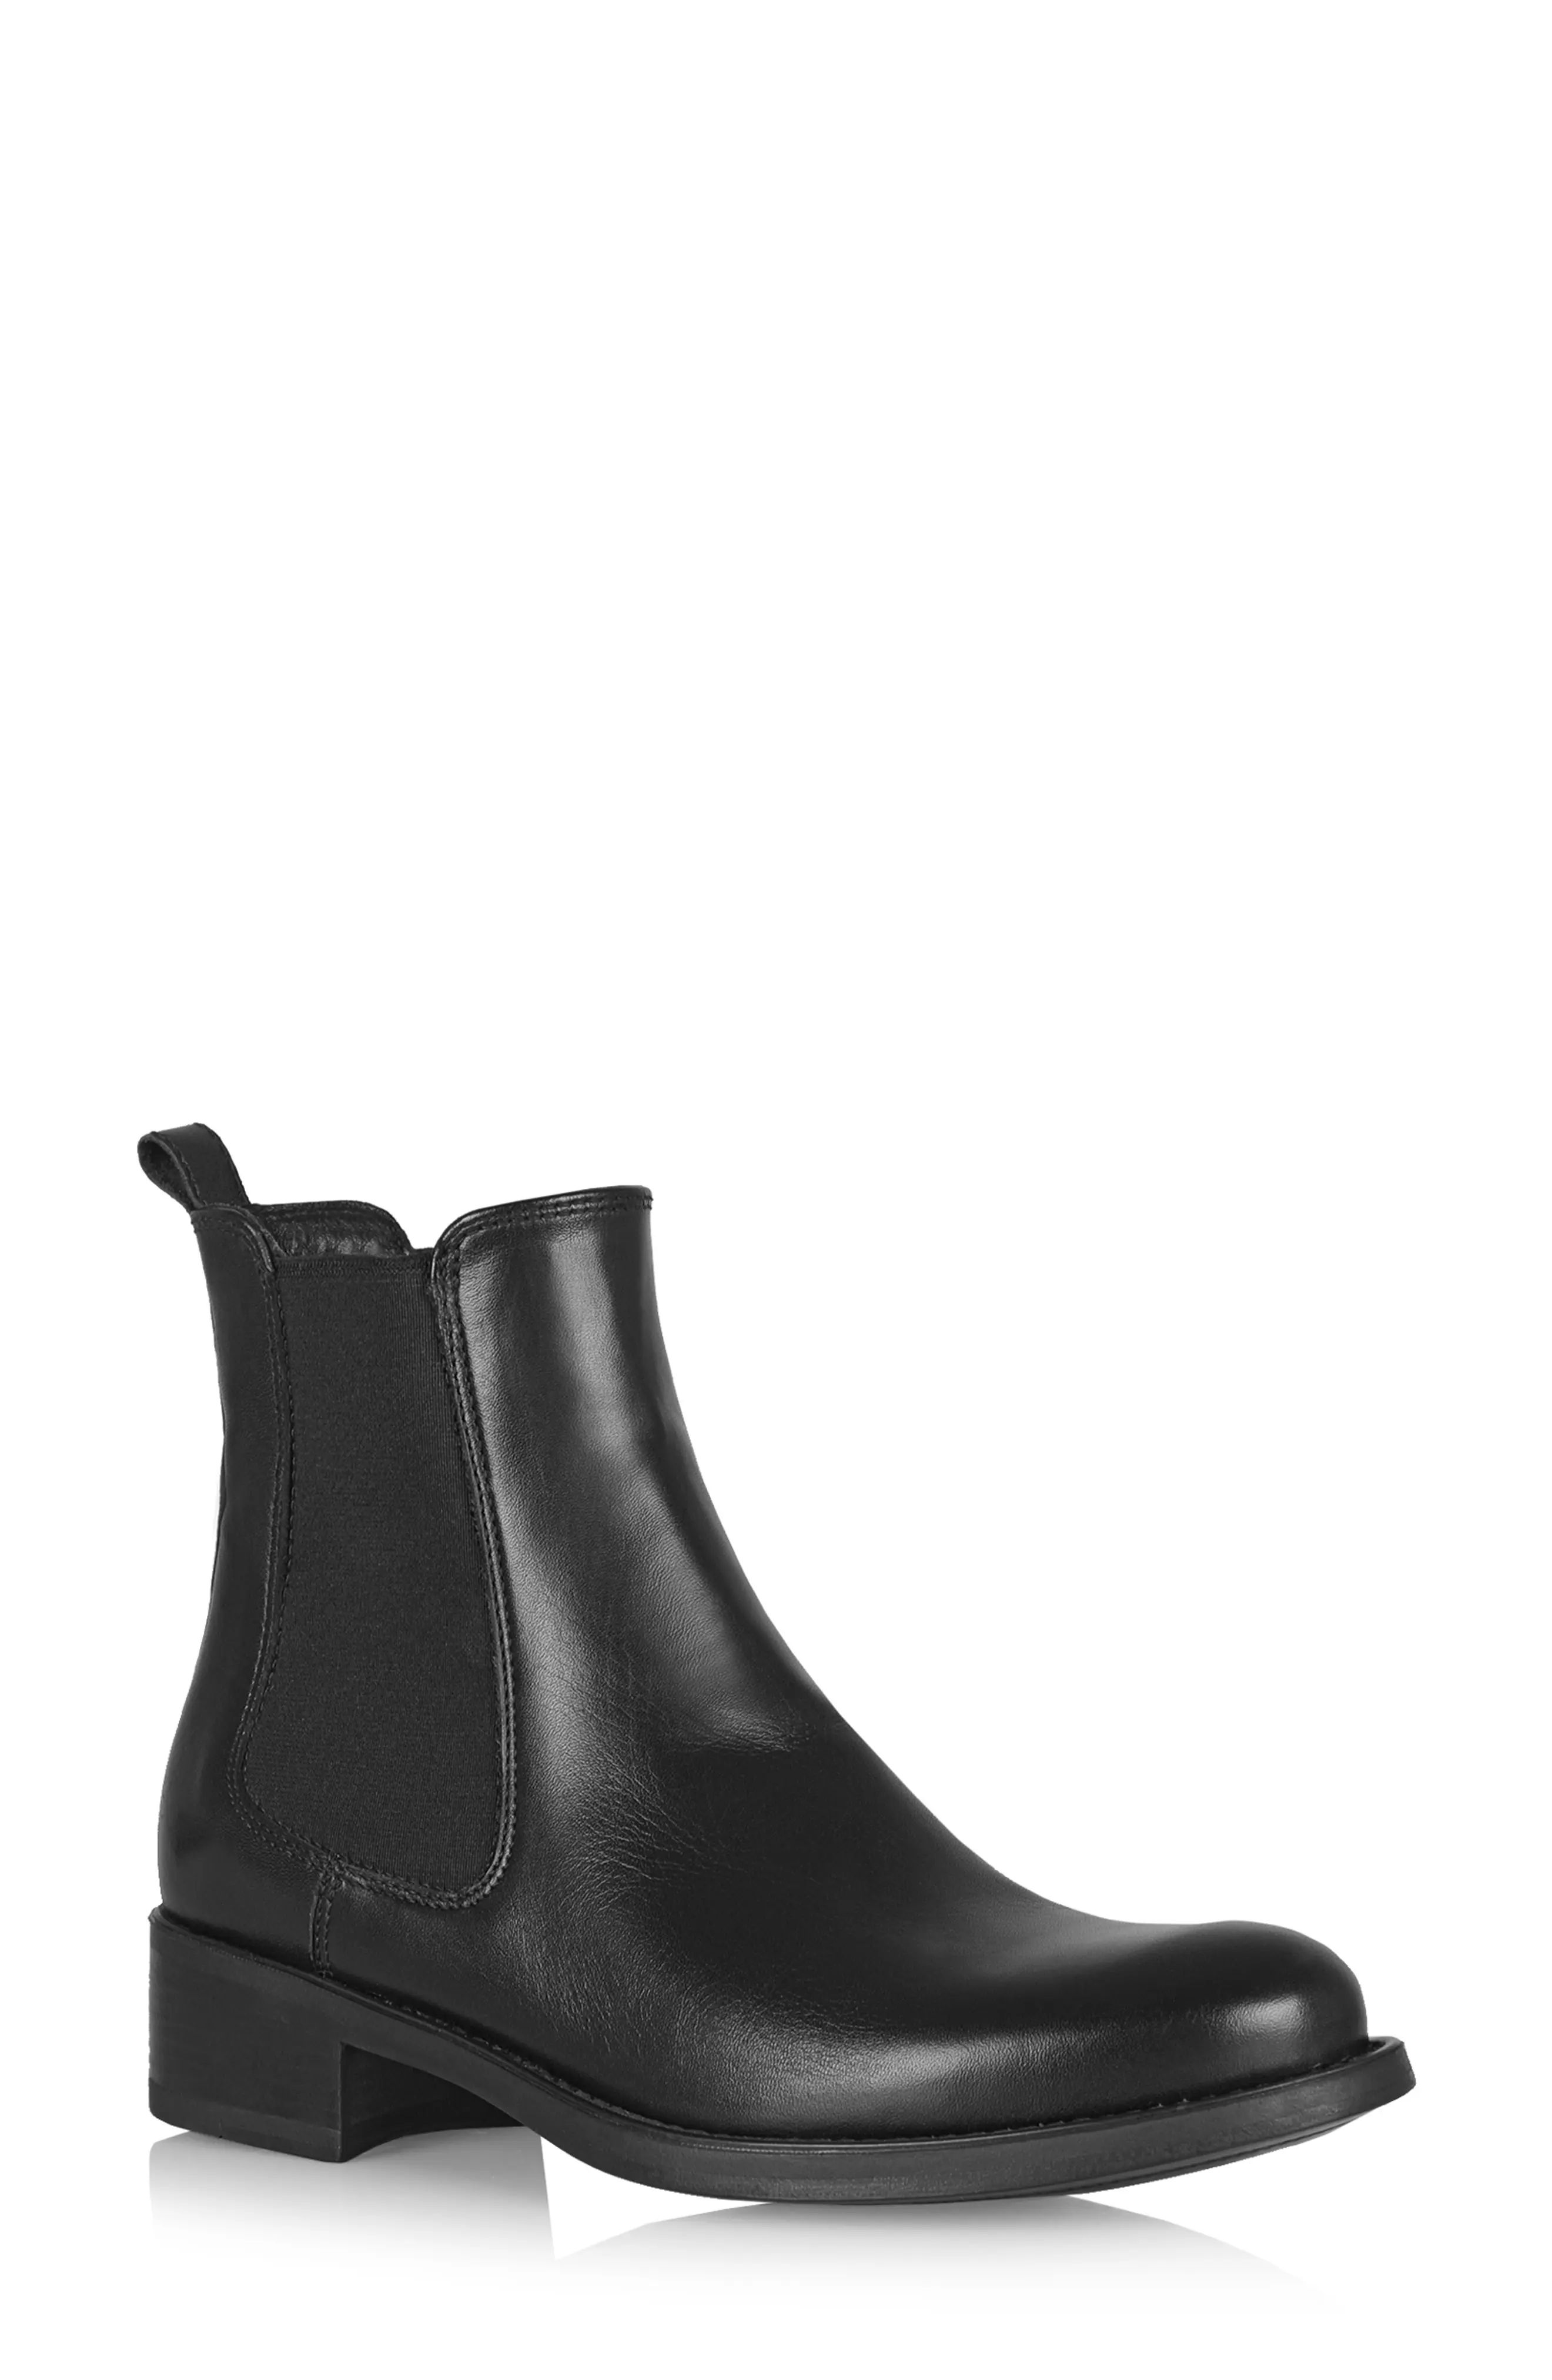 Women's La Canadienne Sara Waterproof Chelsea Boot, Size 7.5 M - Black | Nordstrom